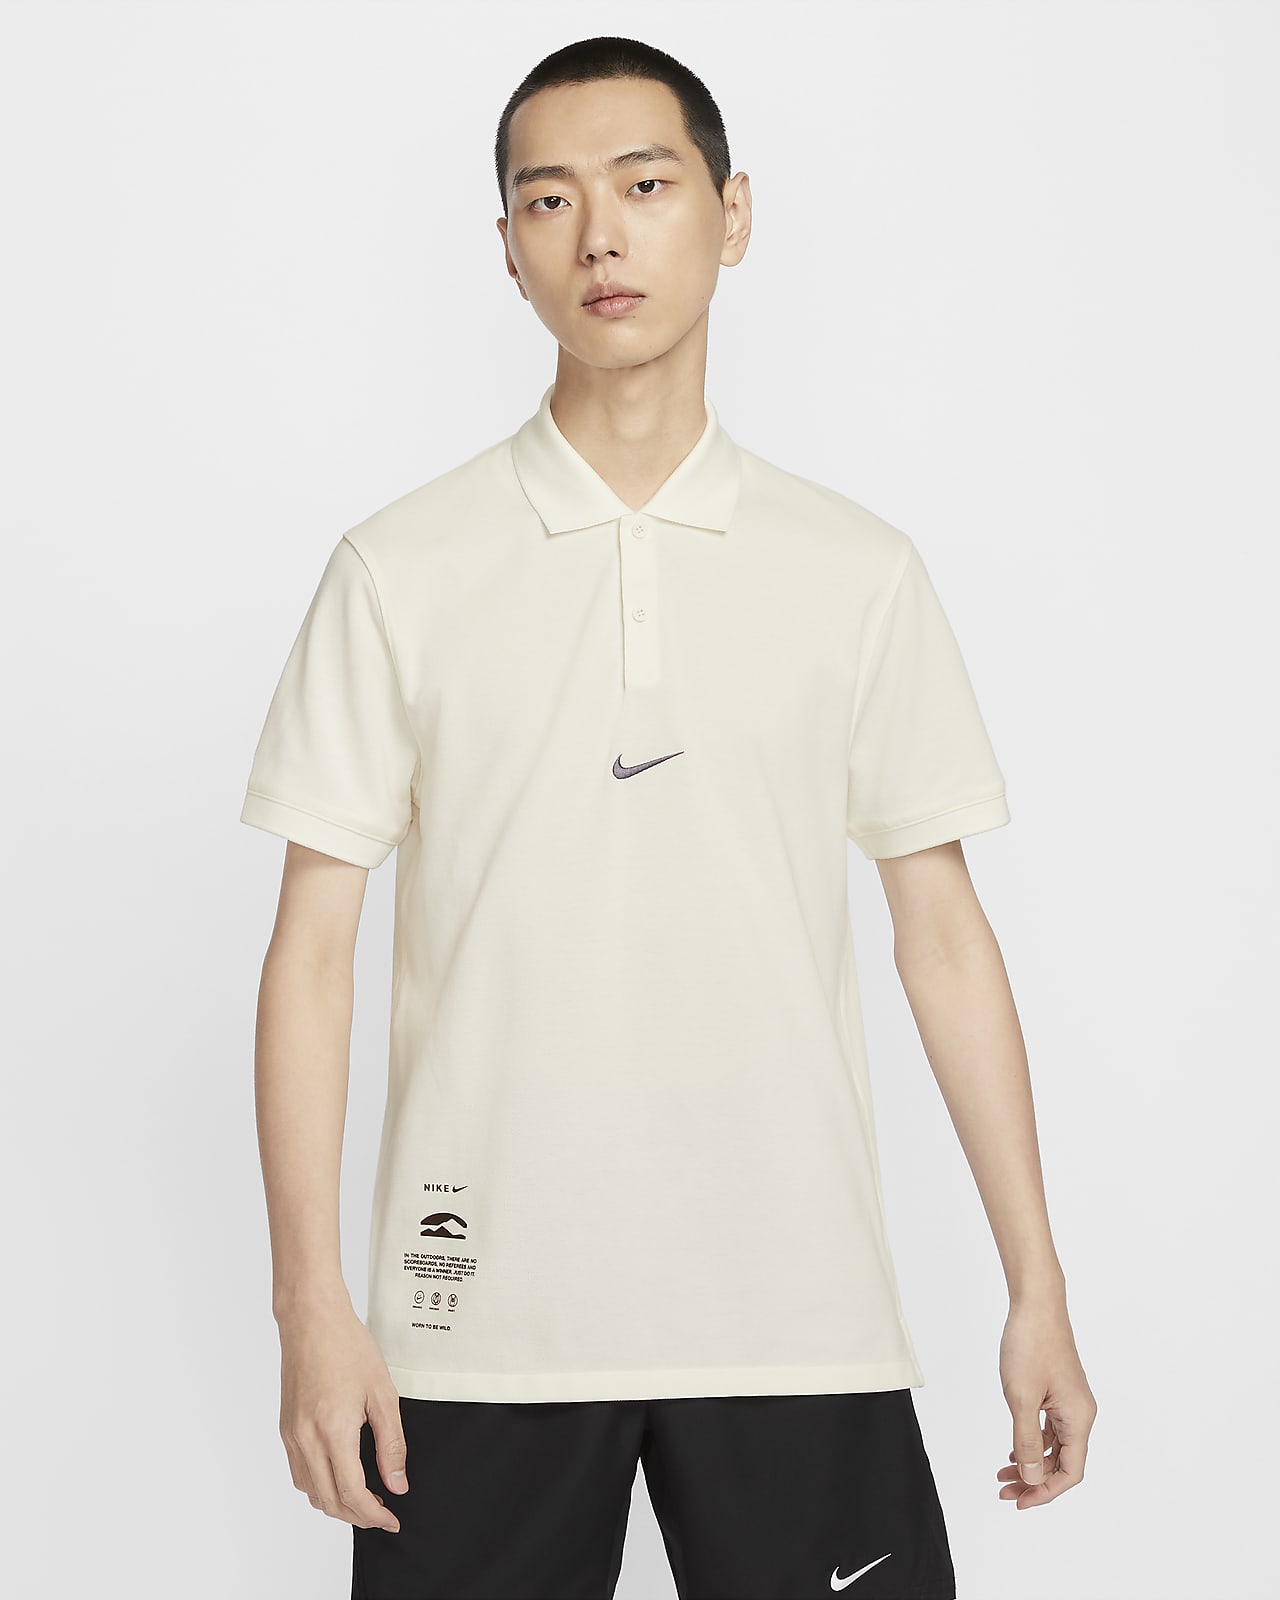 Nike polo 男子速干印花修身网球翻领T恤